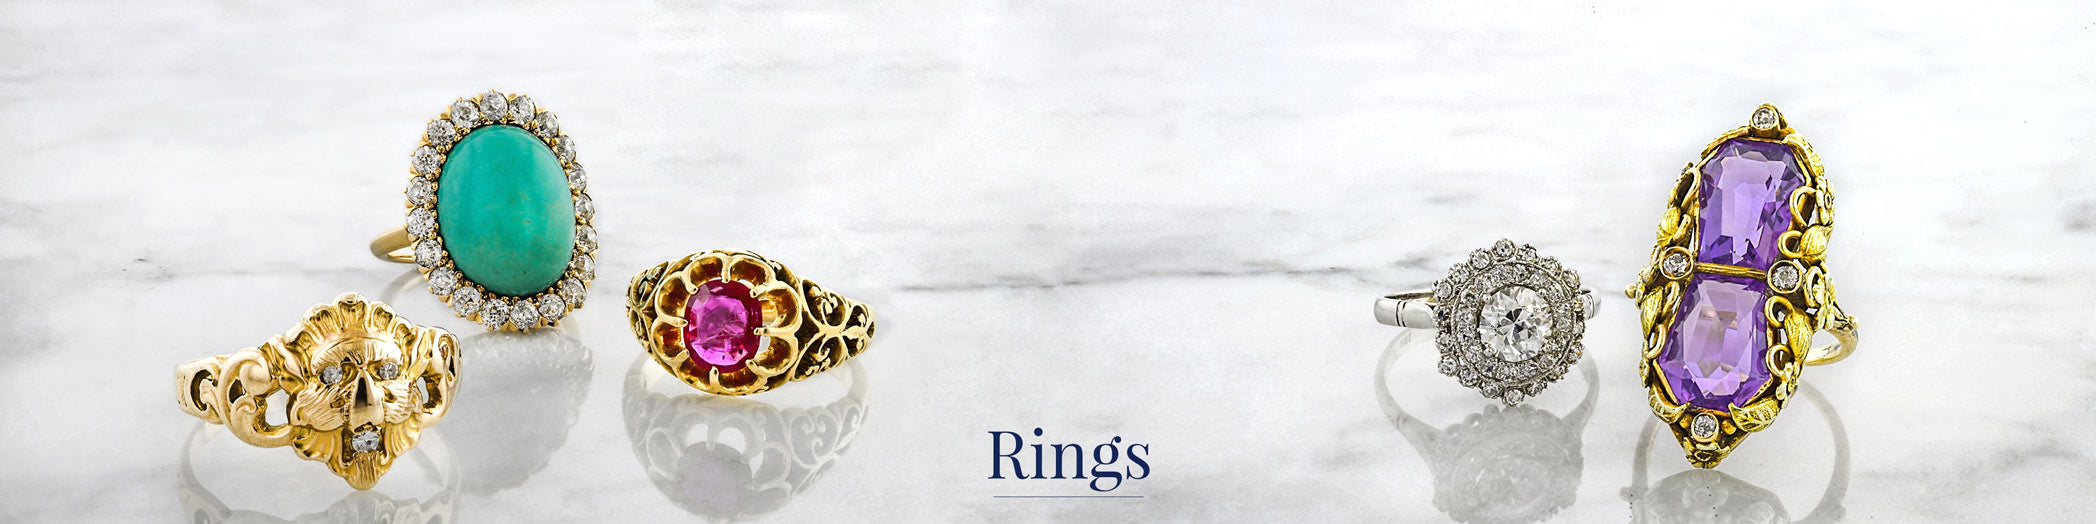 Princess Cut Garnet Art Nouveau Antique Ring in Yellow Gold — Antique  Jewelry Mall